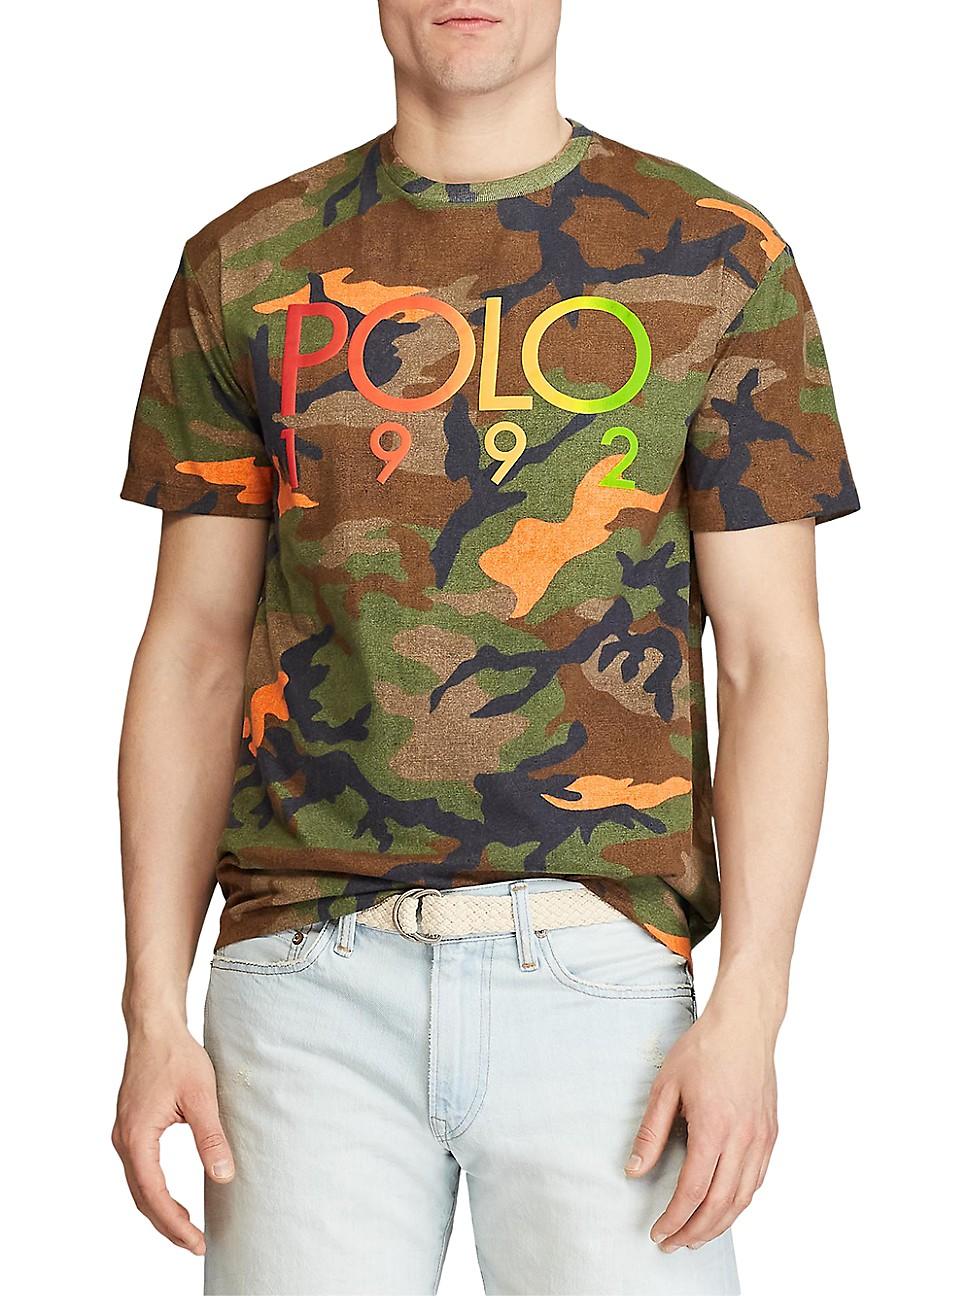 Polo Ralph Lauren Polo 1992 Camo T-shirt for Men | Lyst